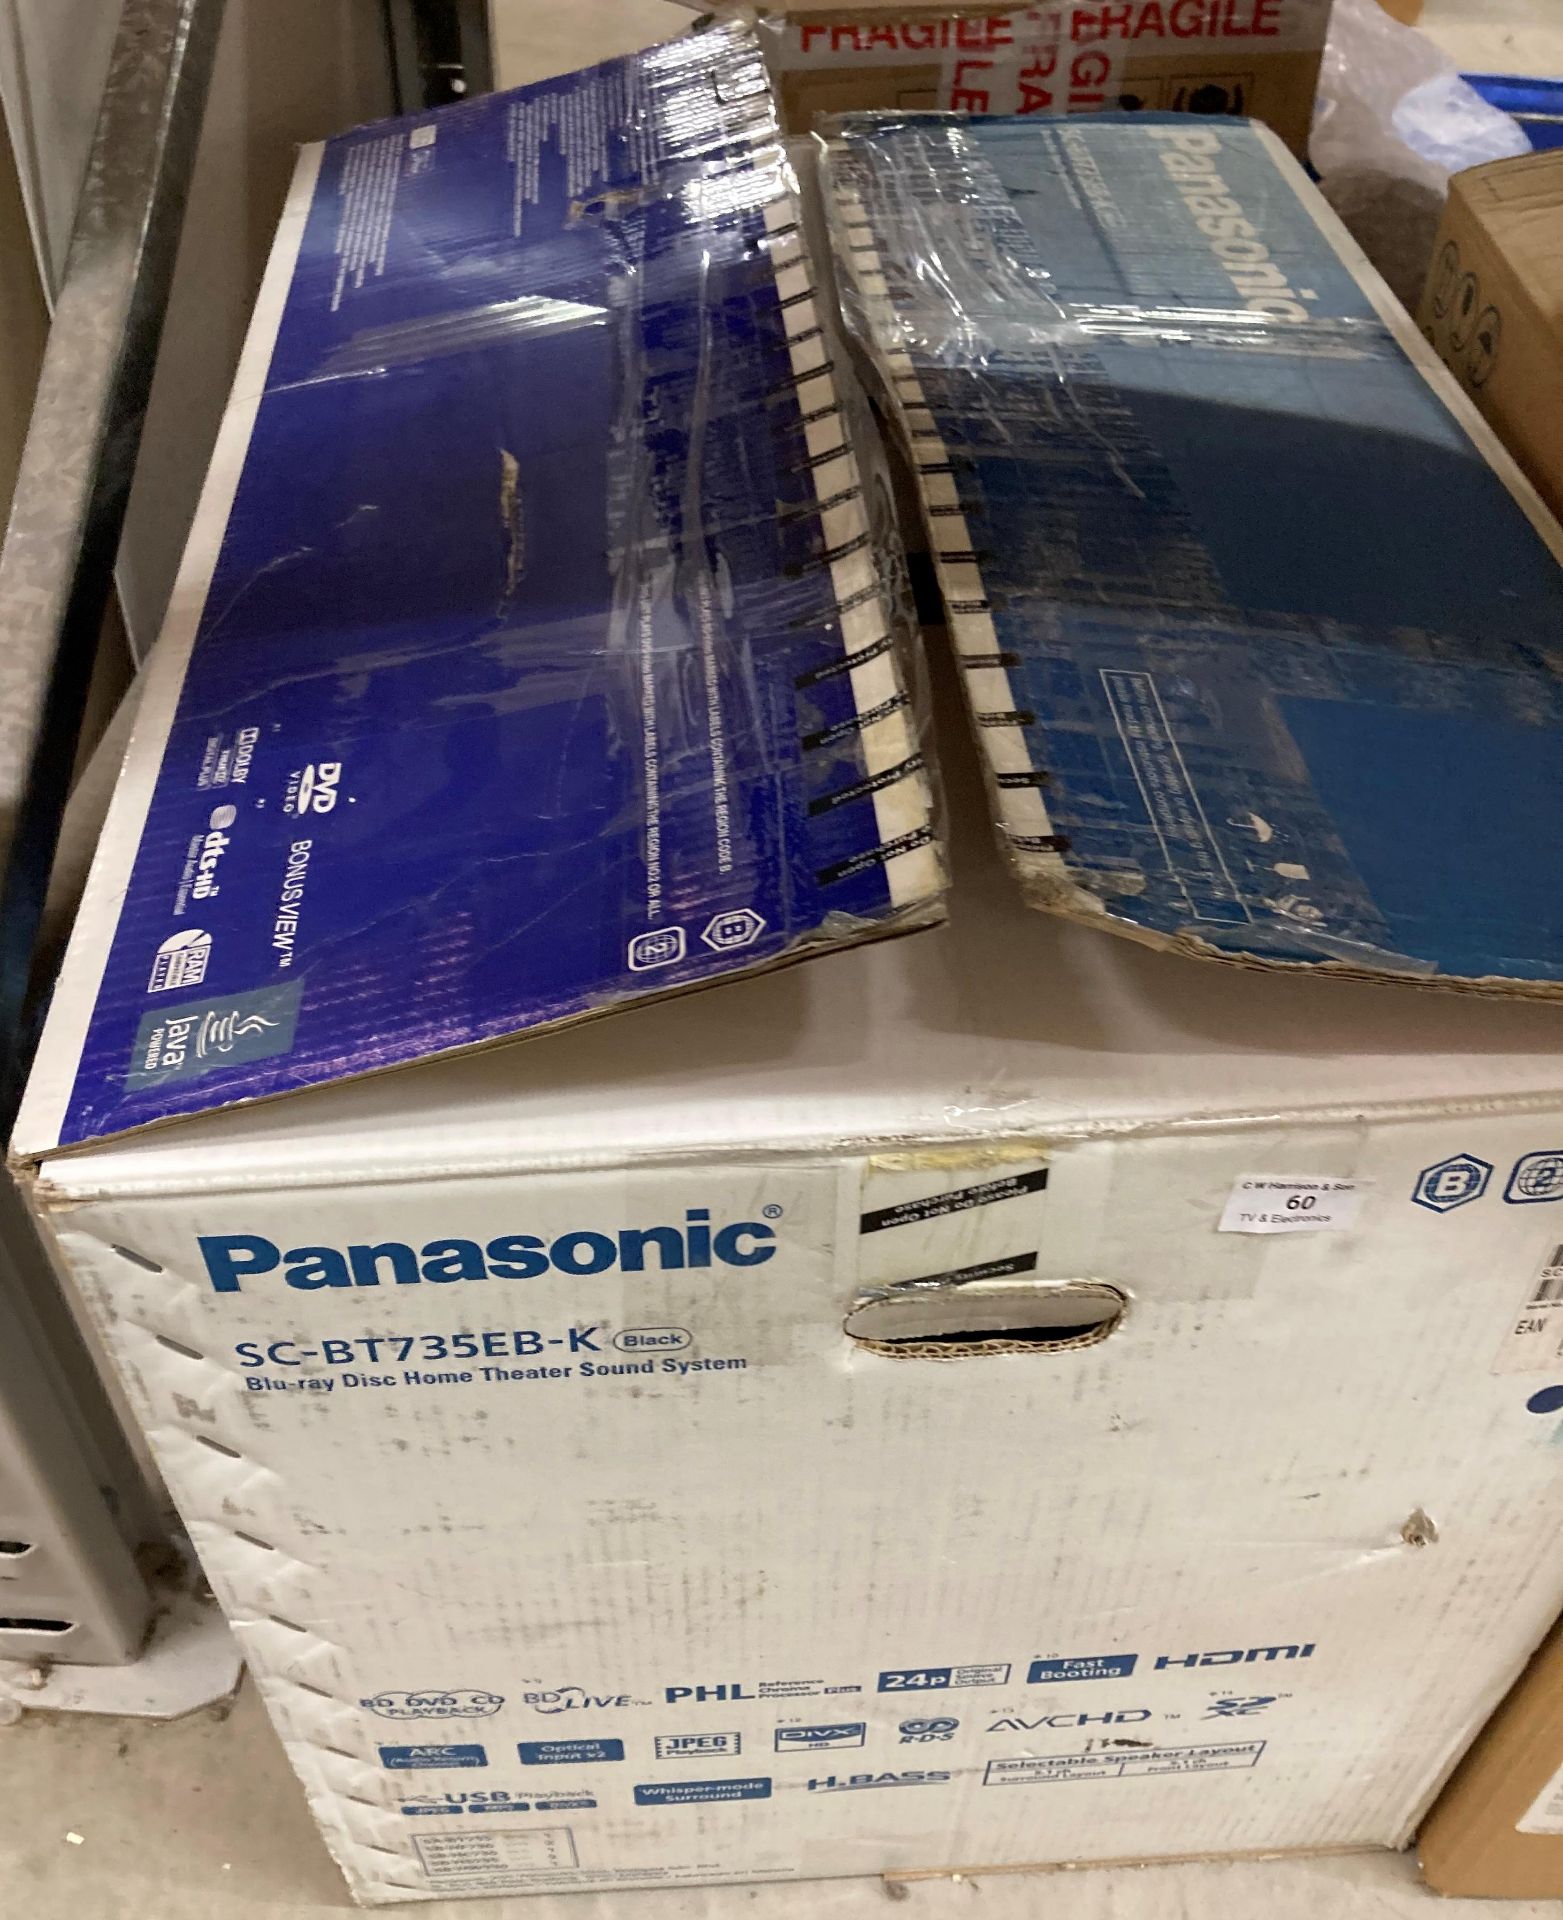 Panasonic SC-BT735Eb-K Blu-ray disc home cinema system parts missing (saleroom location: L10) - Image 2 of 2